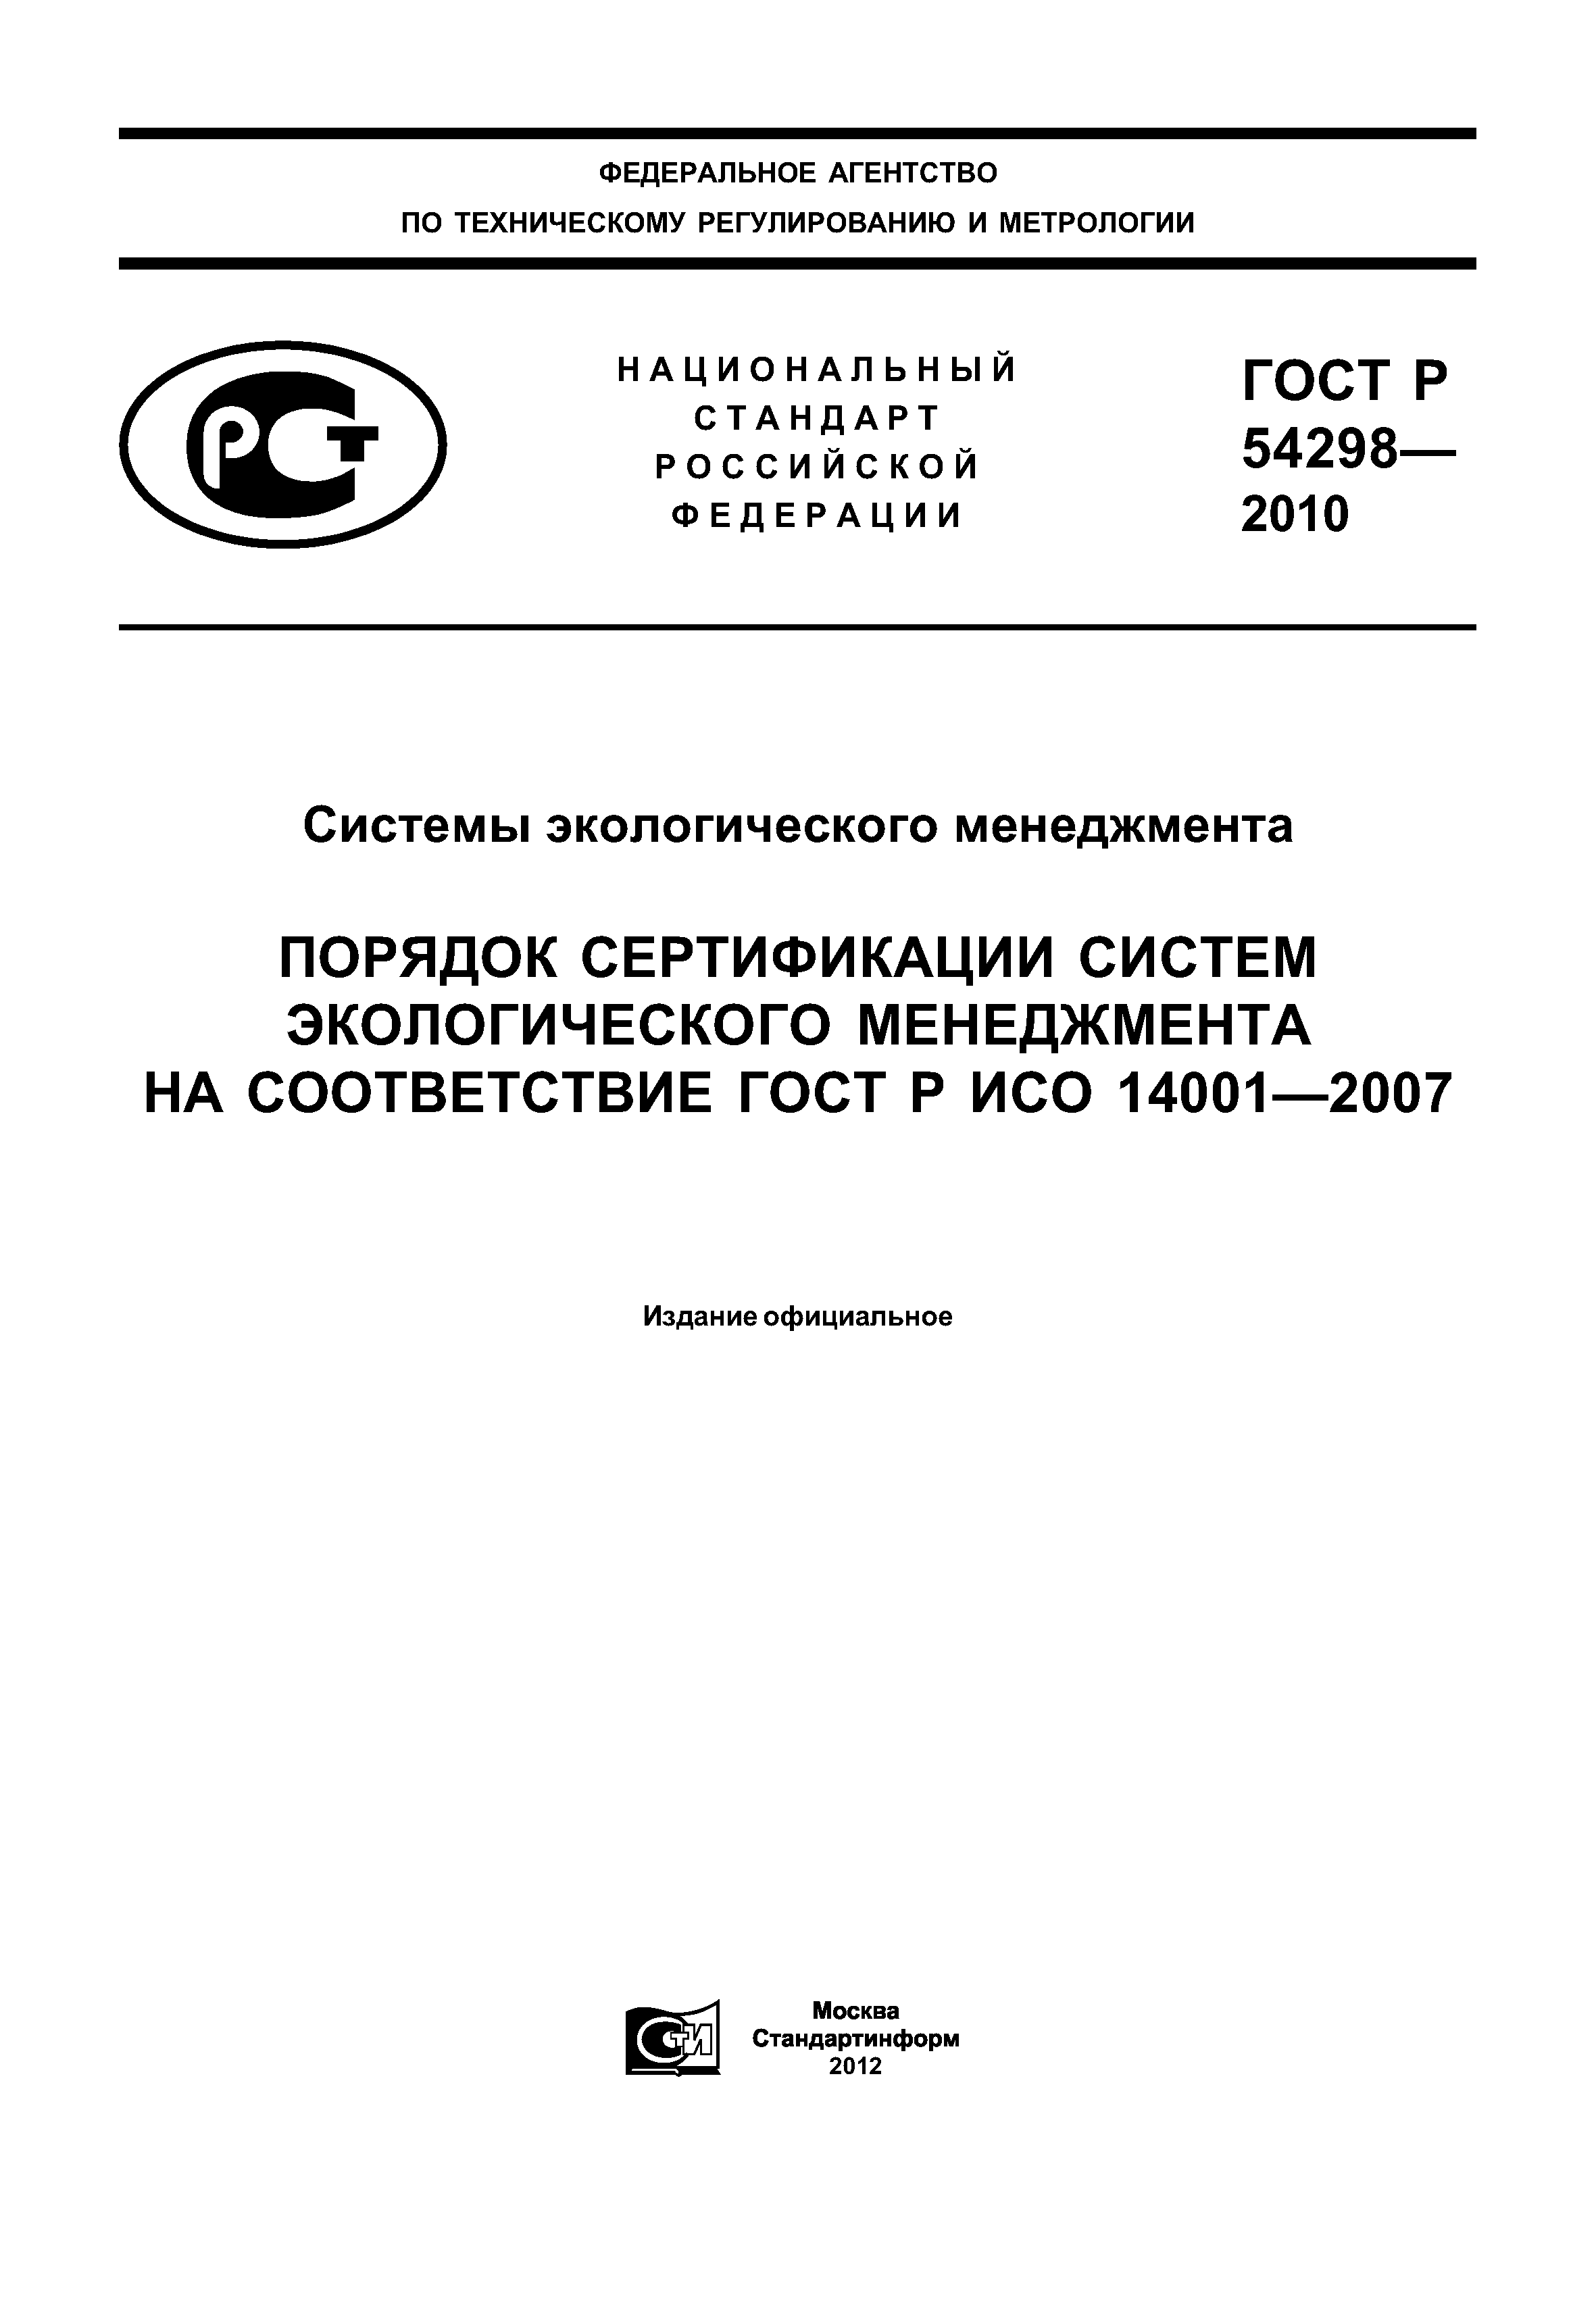 ГОСТ Р 54298-2010